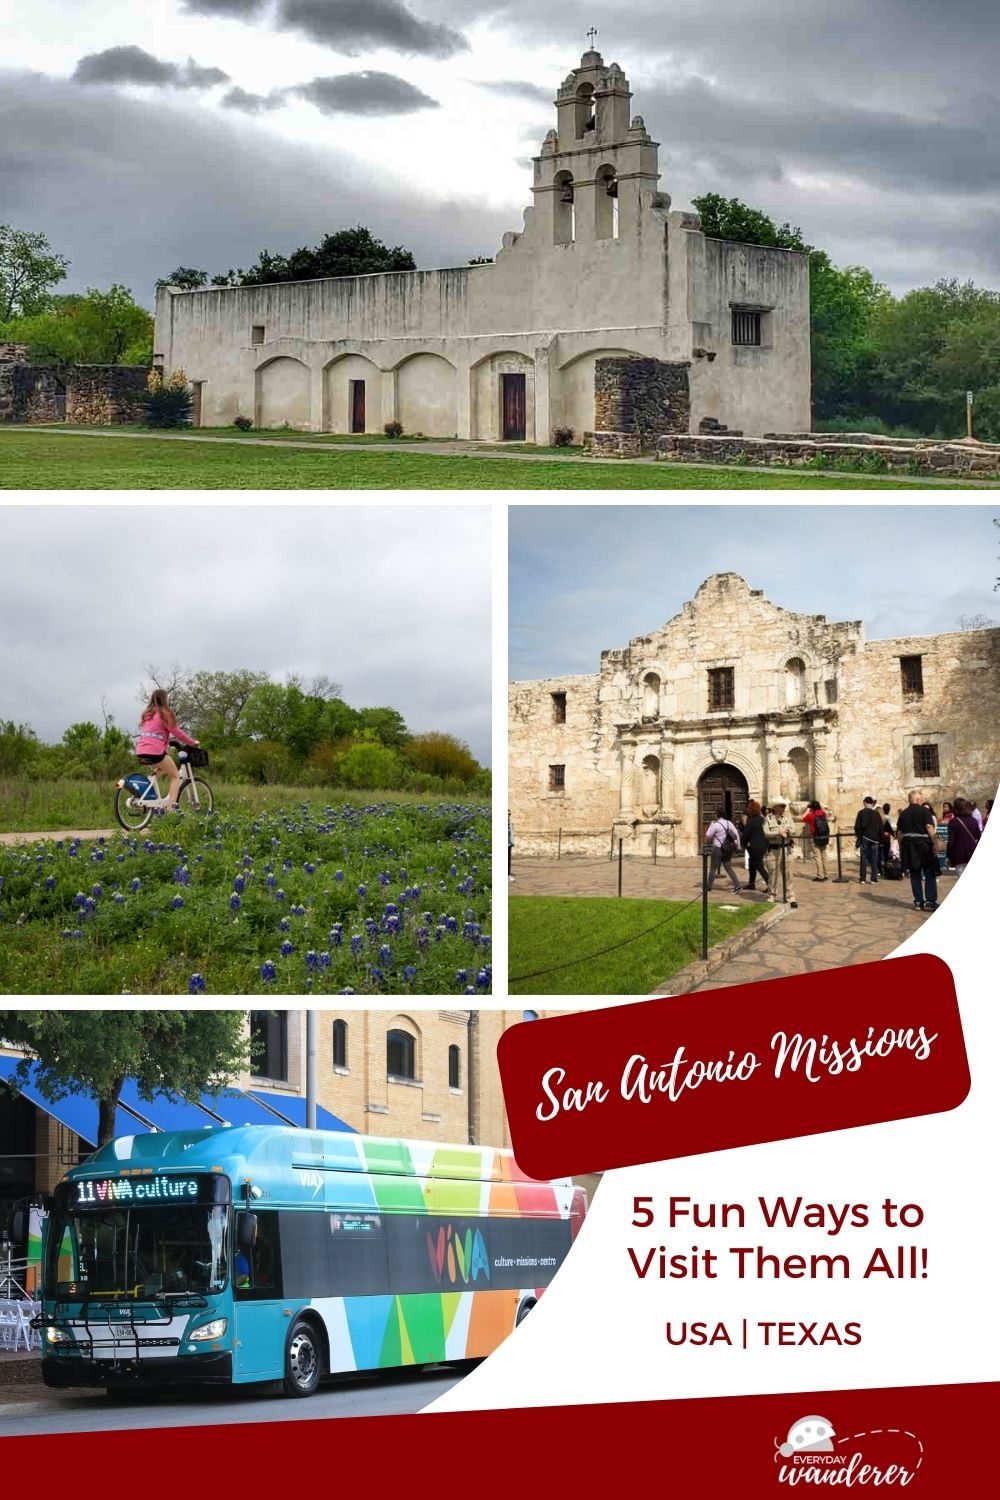 How to Visit San Antonio Missions - Pin 1 - JPG